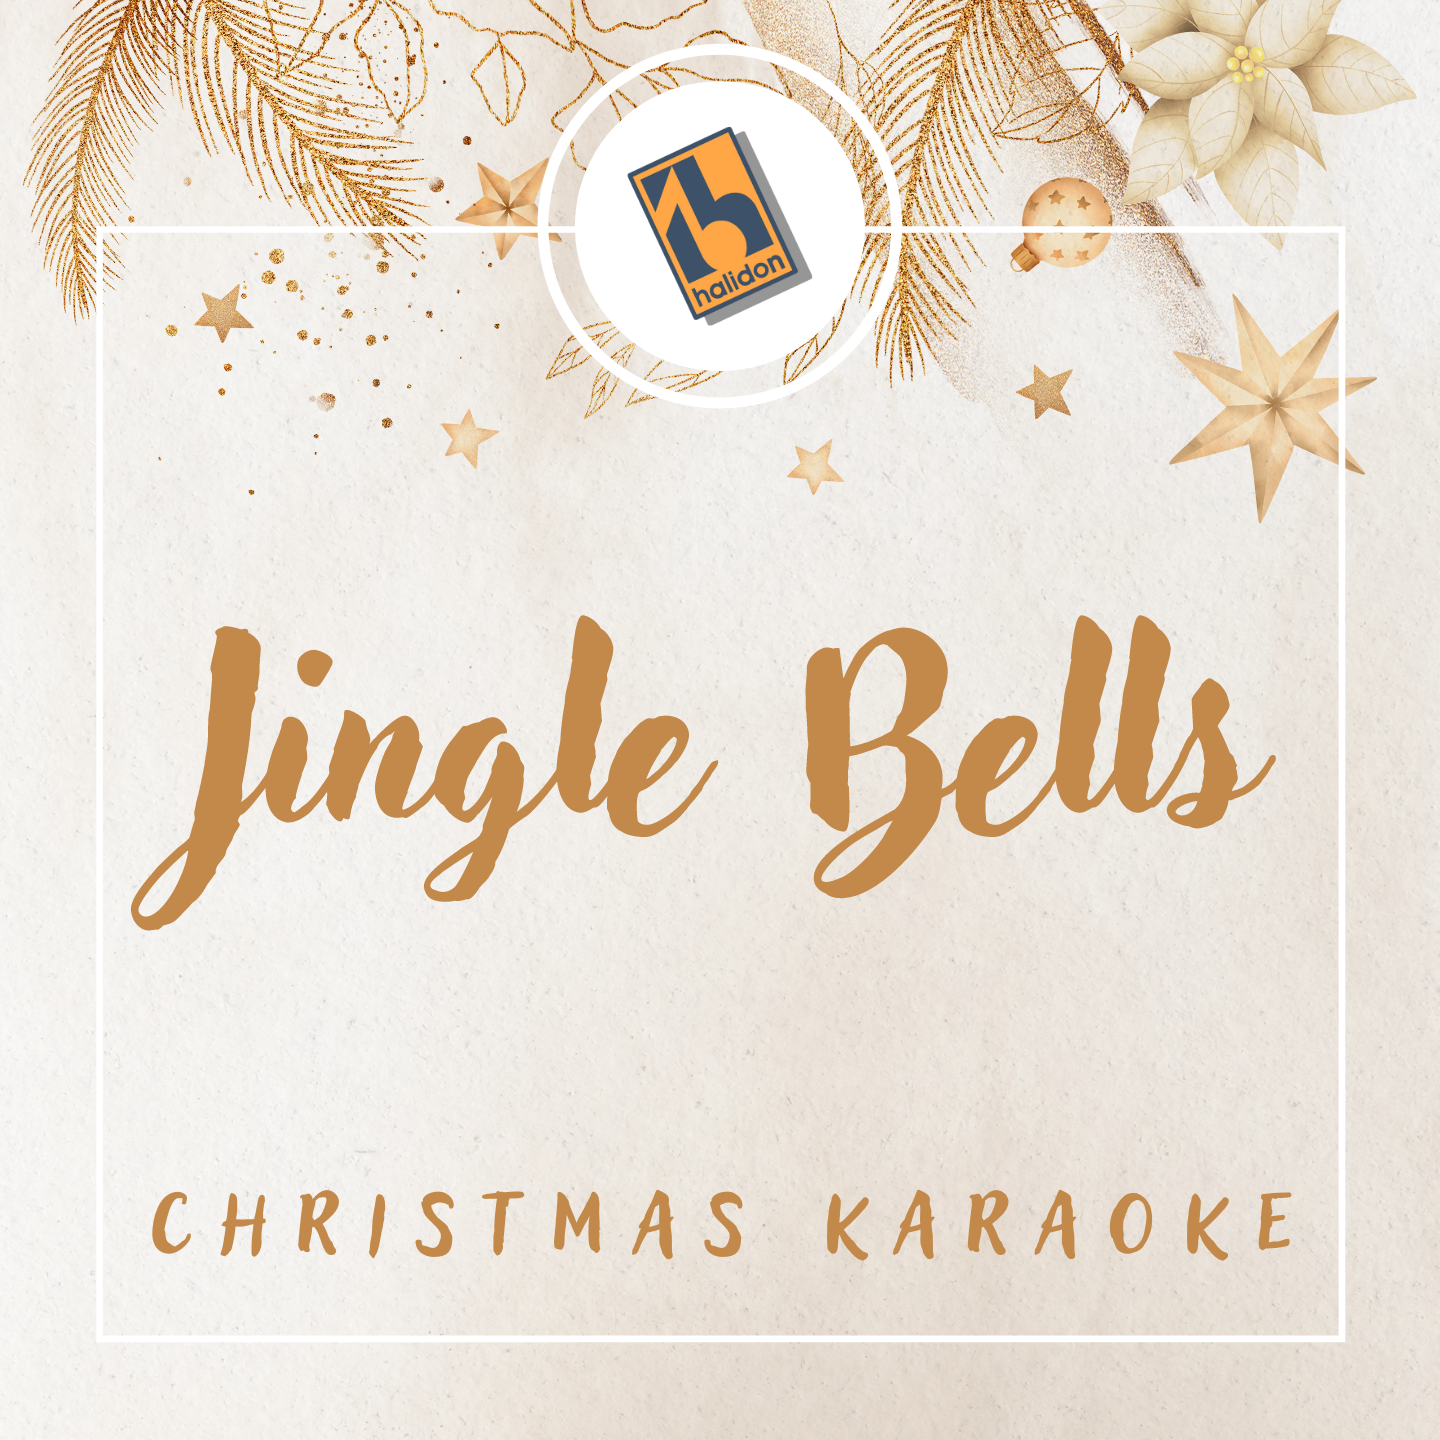 Jingle Bells (Karaoke)